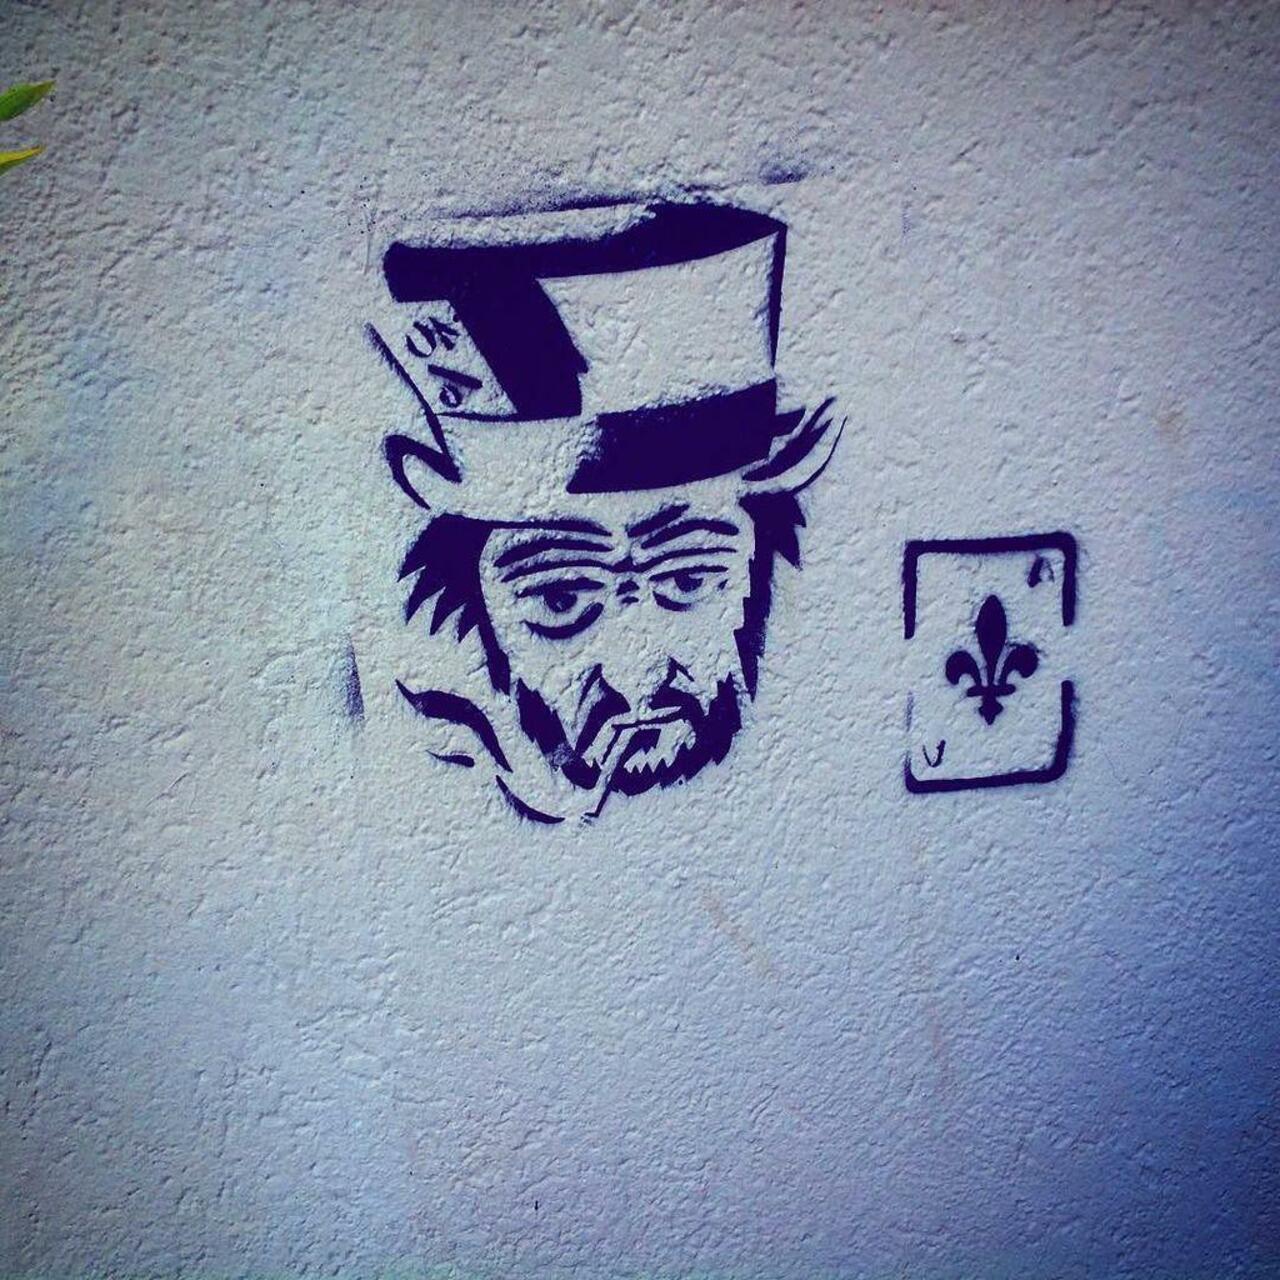 Le fou du roi #street #streetart #streetartparis #graff #graffiti #wallart #sprayart #urban #urbain #urbainart #art… http://t.co/ET5dqlzQSC